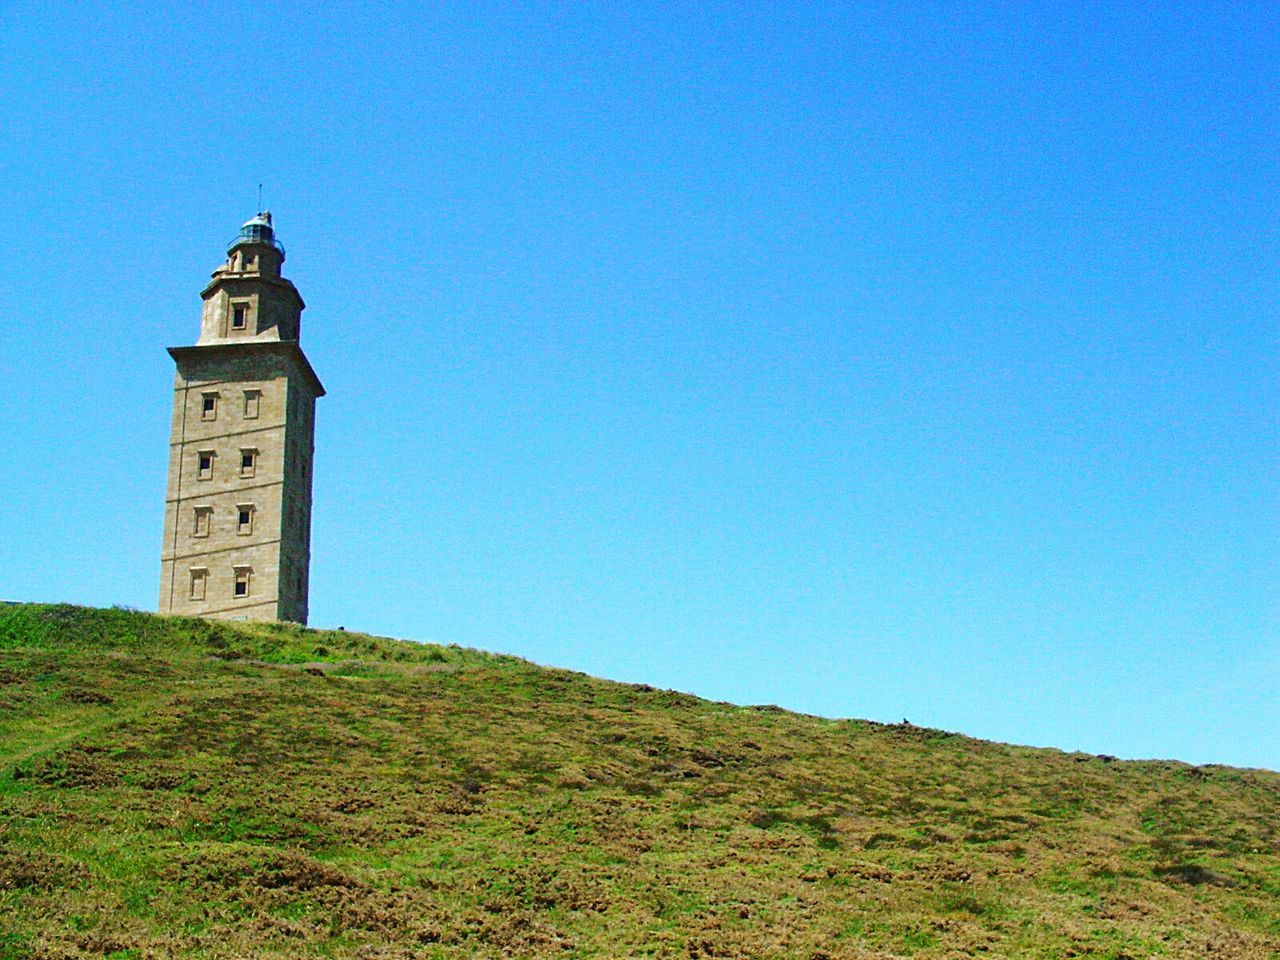 Clock tower against clear blue sky